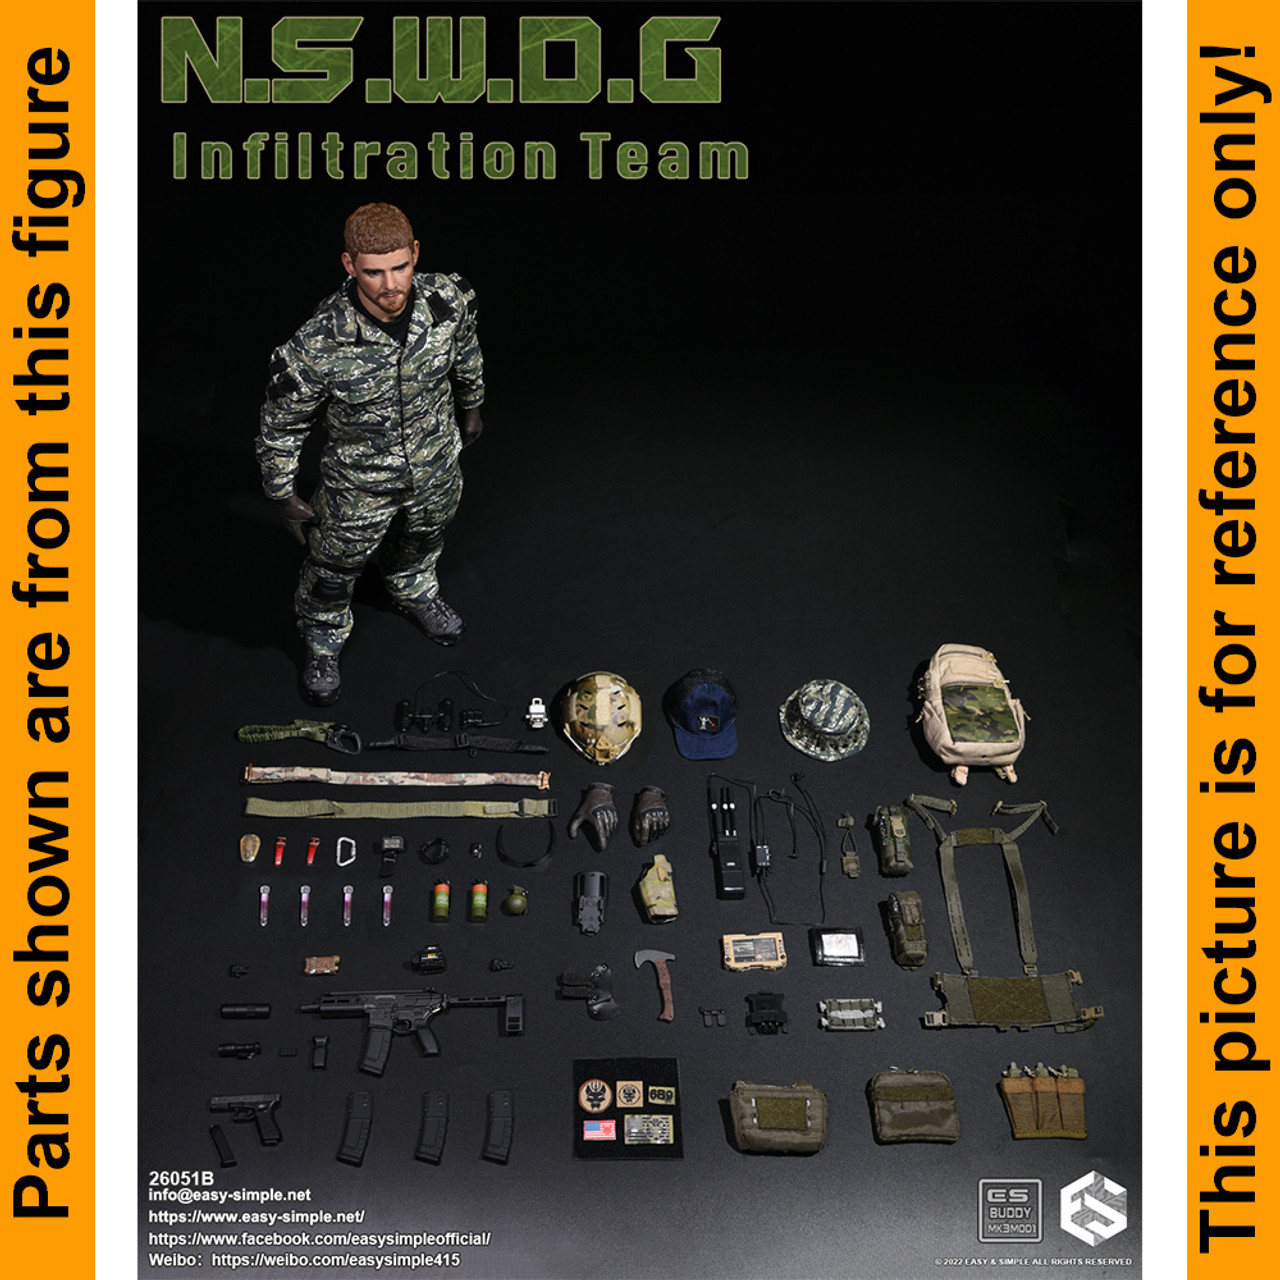 B NSWDG Infiltration Team - Tiger Camo Uniform - 1/6 Scale -